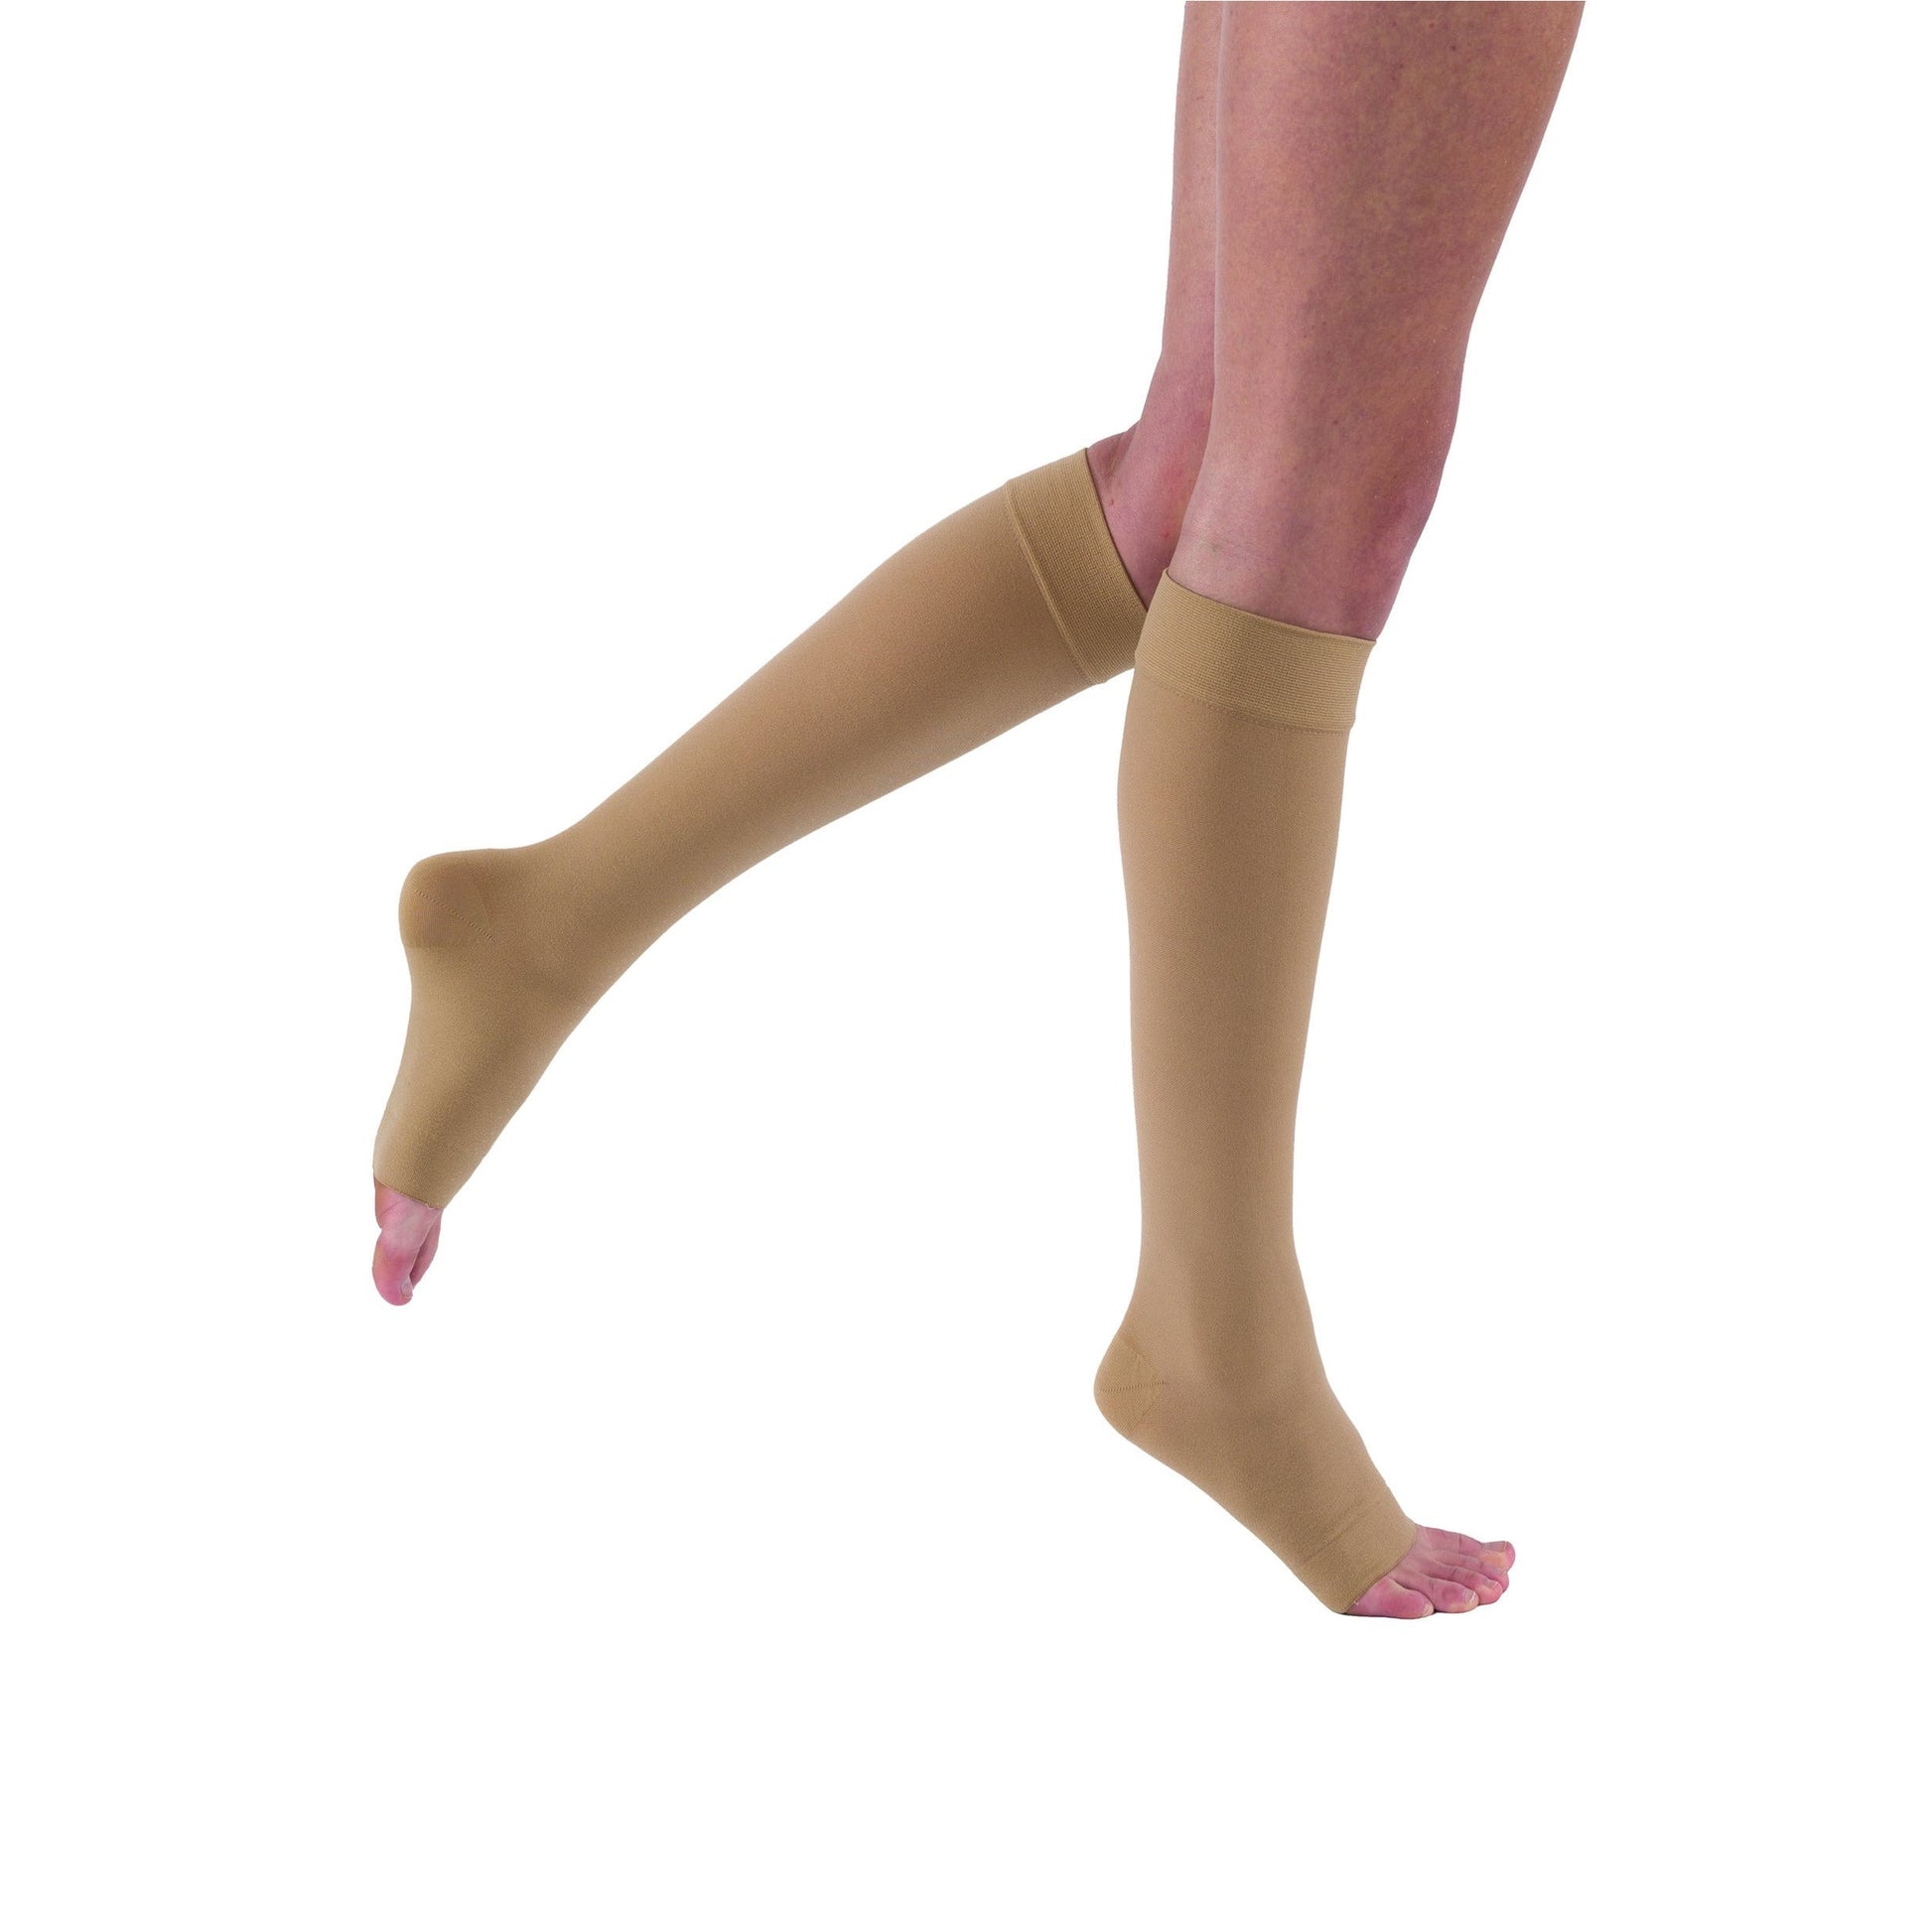 30-40 Compression Stockings - Women Open toe